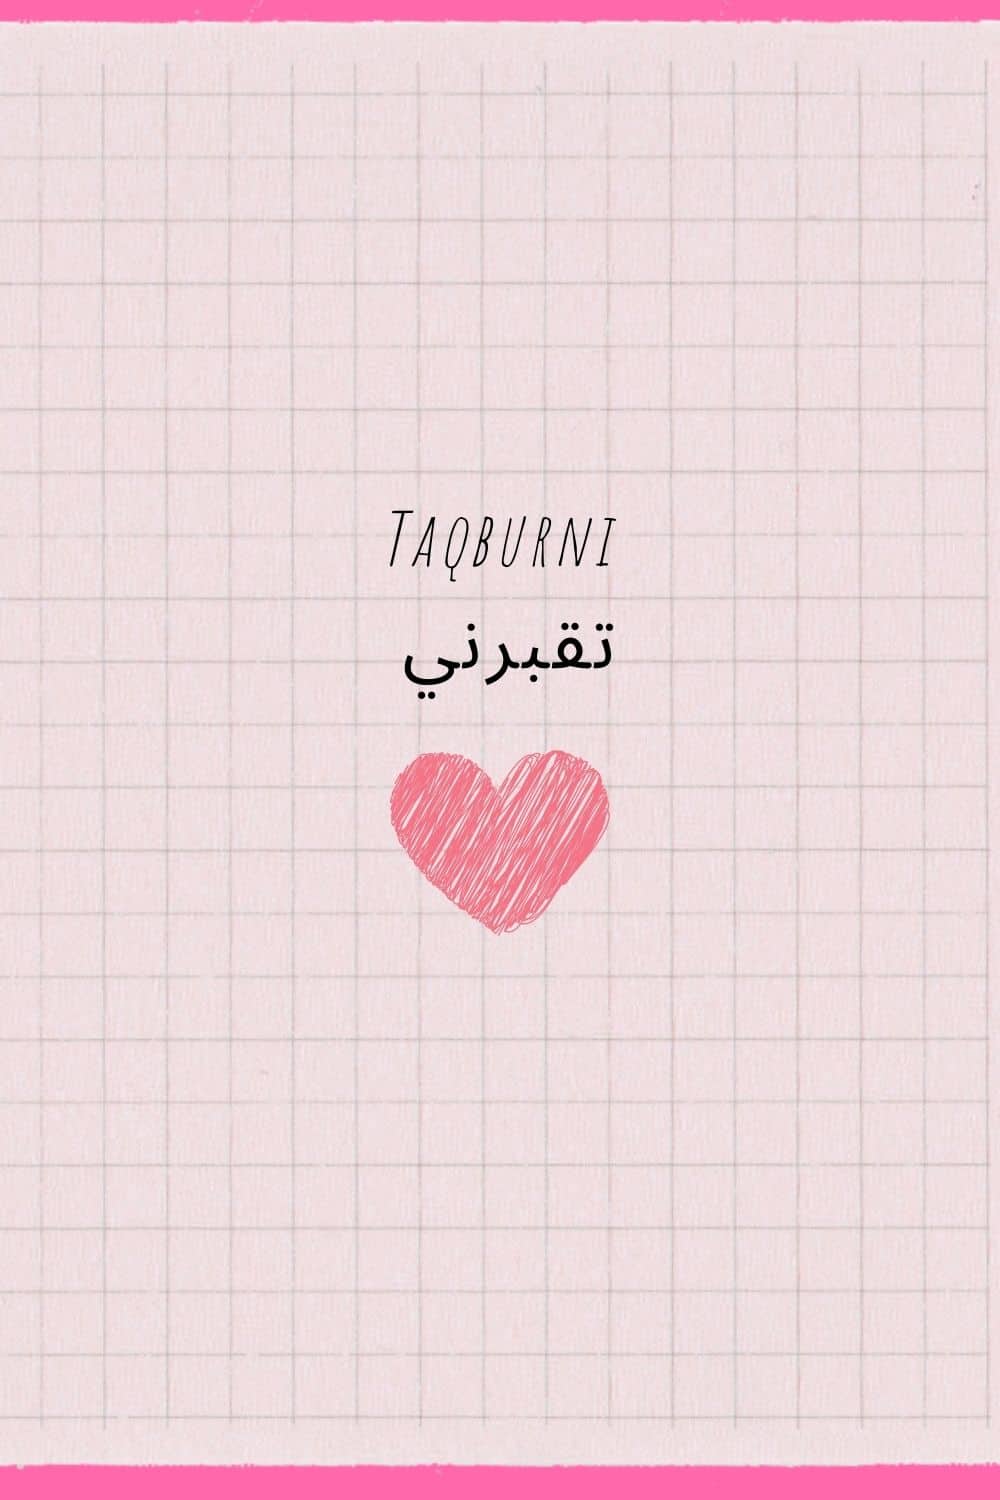 Je t aime en arabe levantin